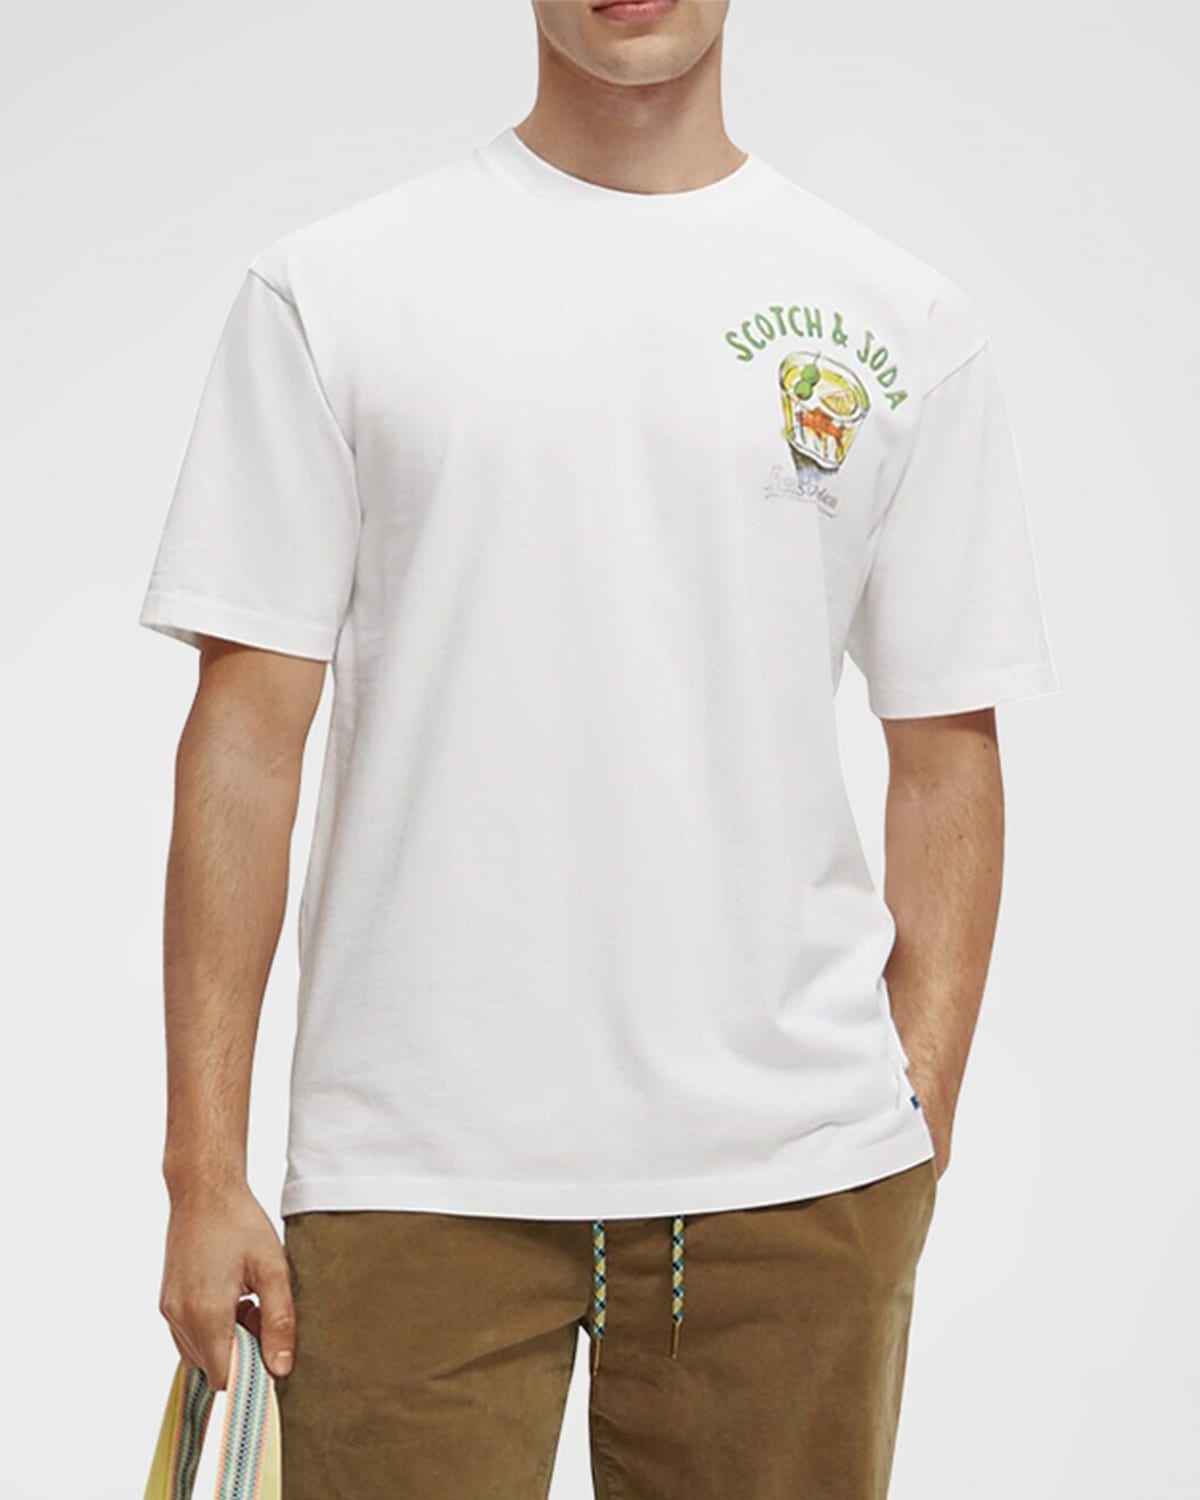 Men's Artwork Organic Cotton T-Shirt